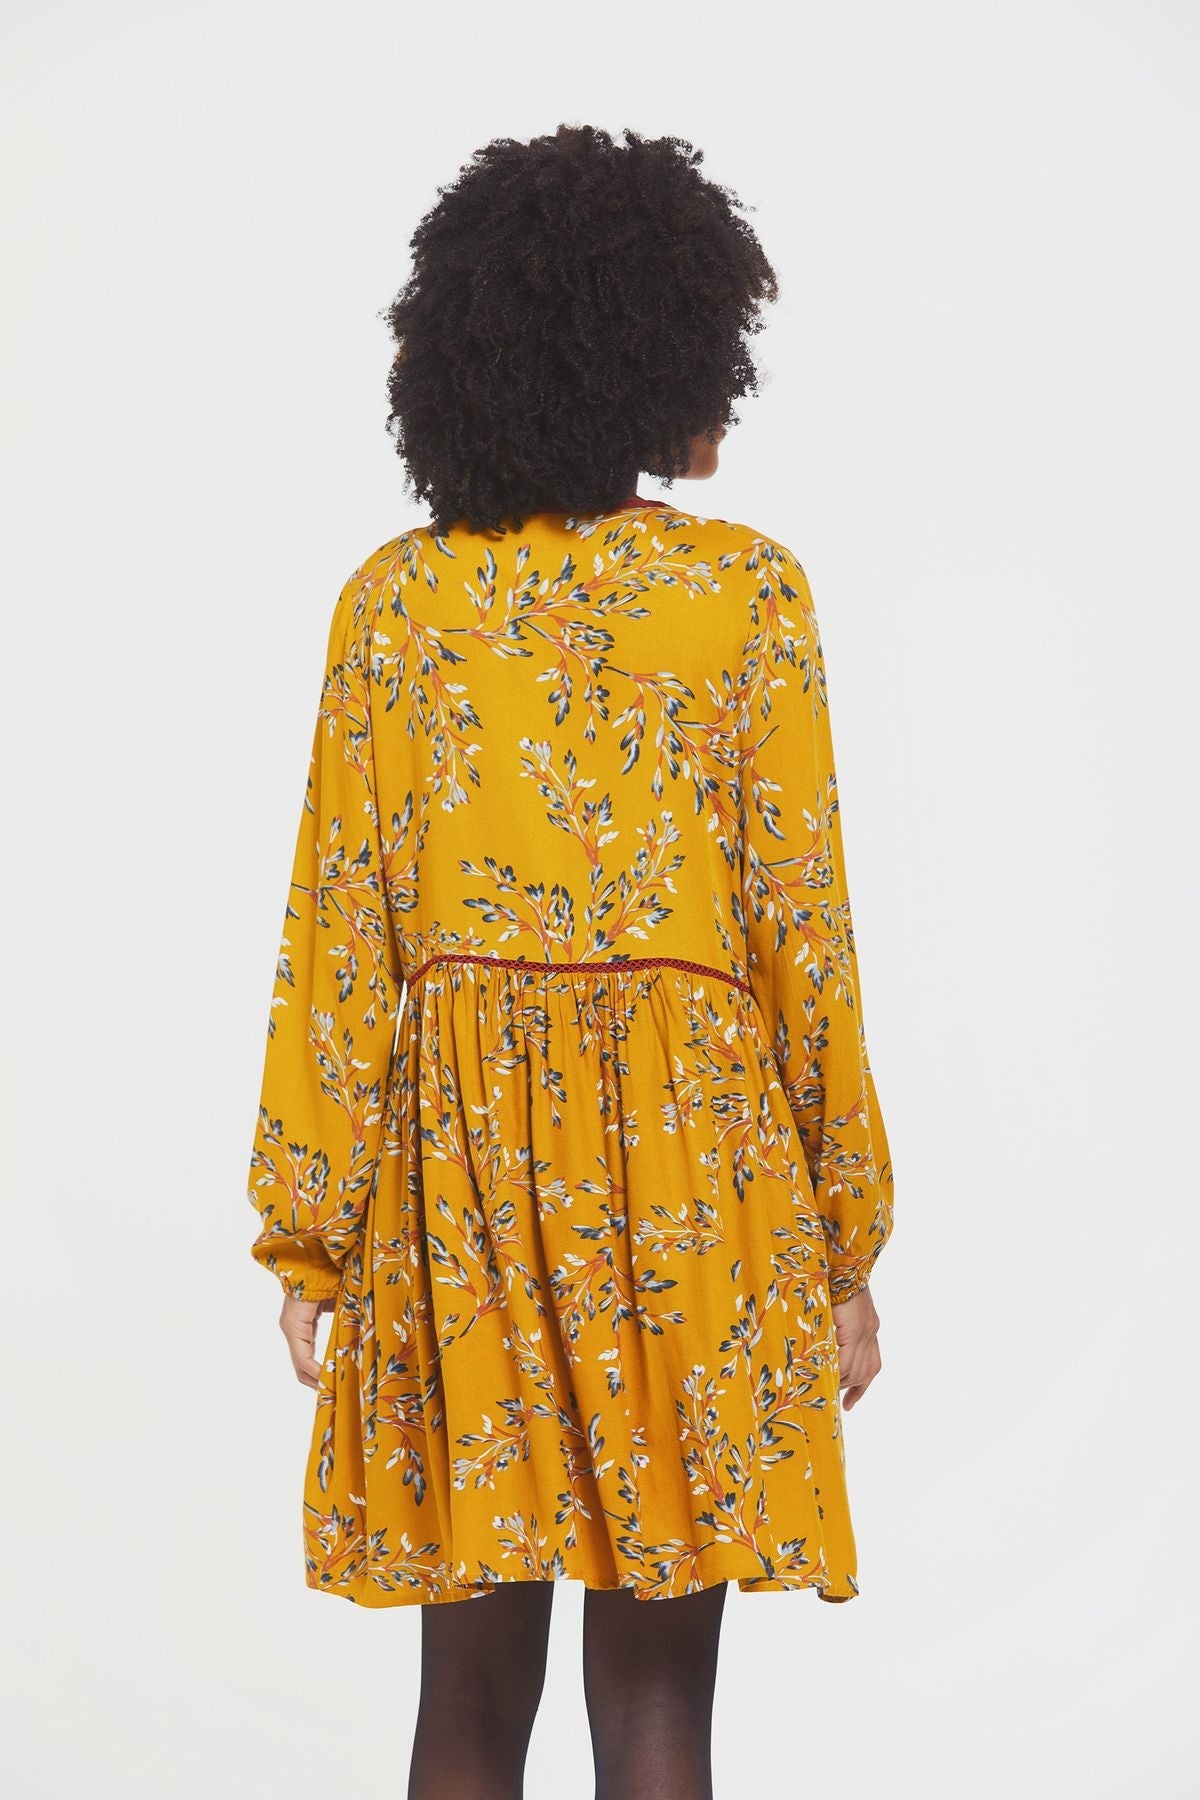 Long Sleeve Mini Lacey Fall Dress Yellow